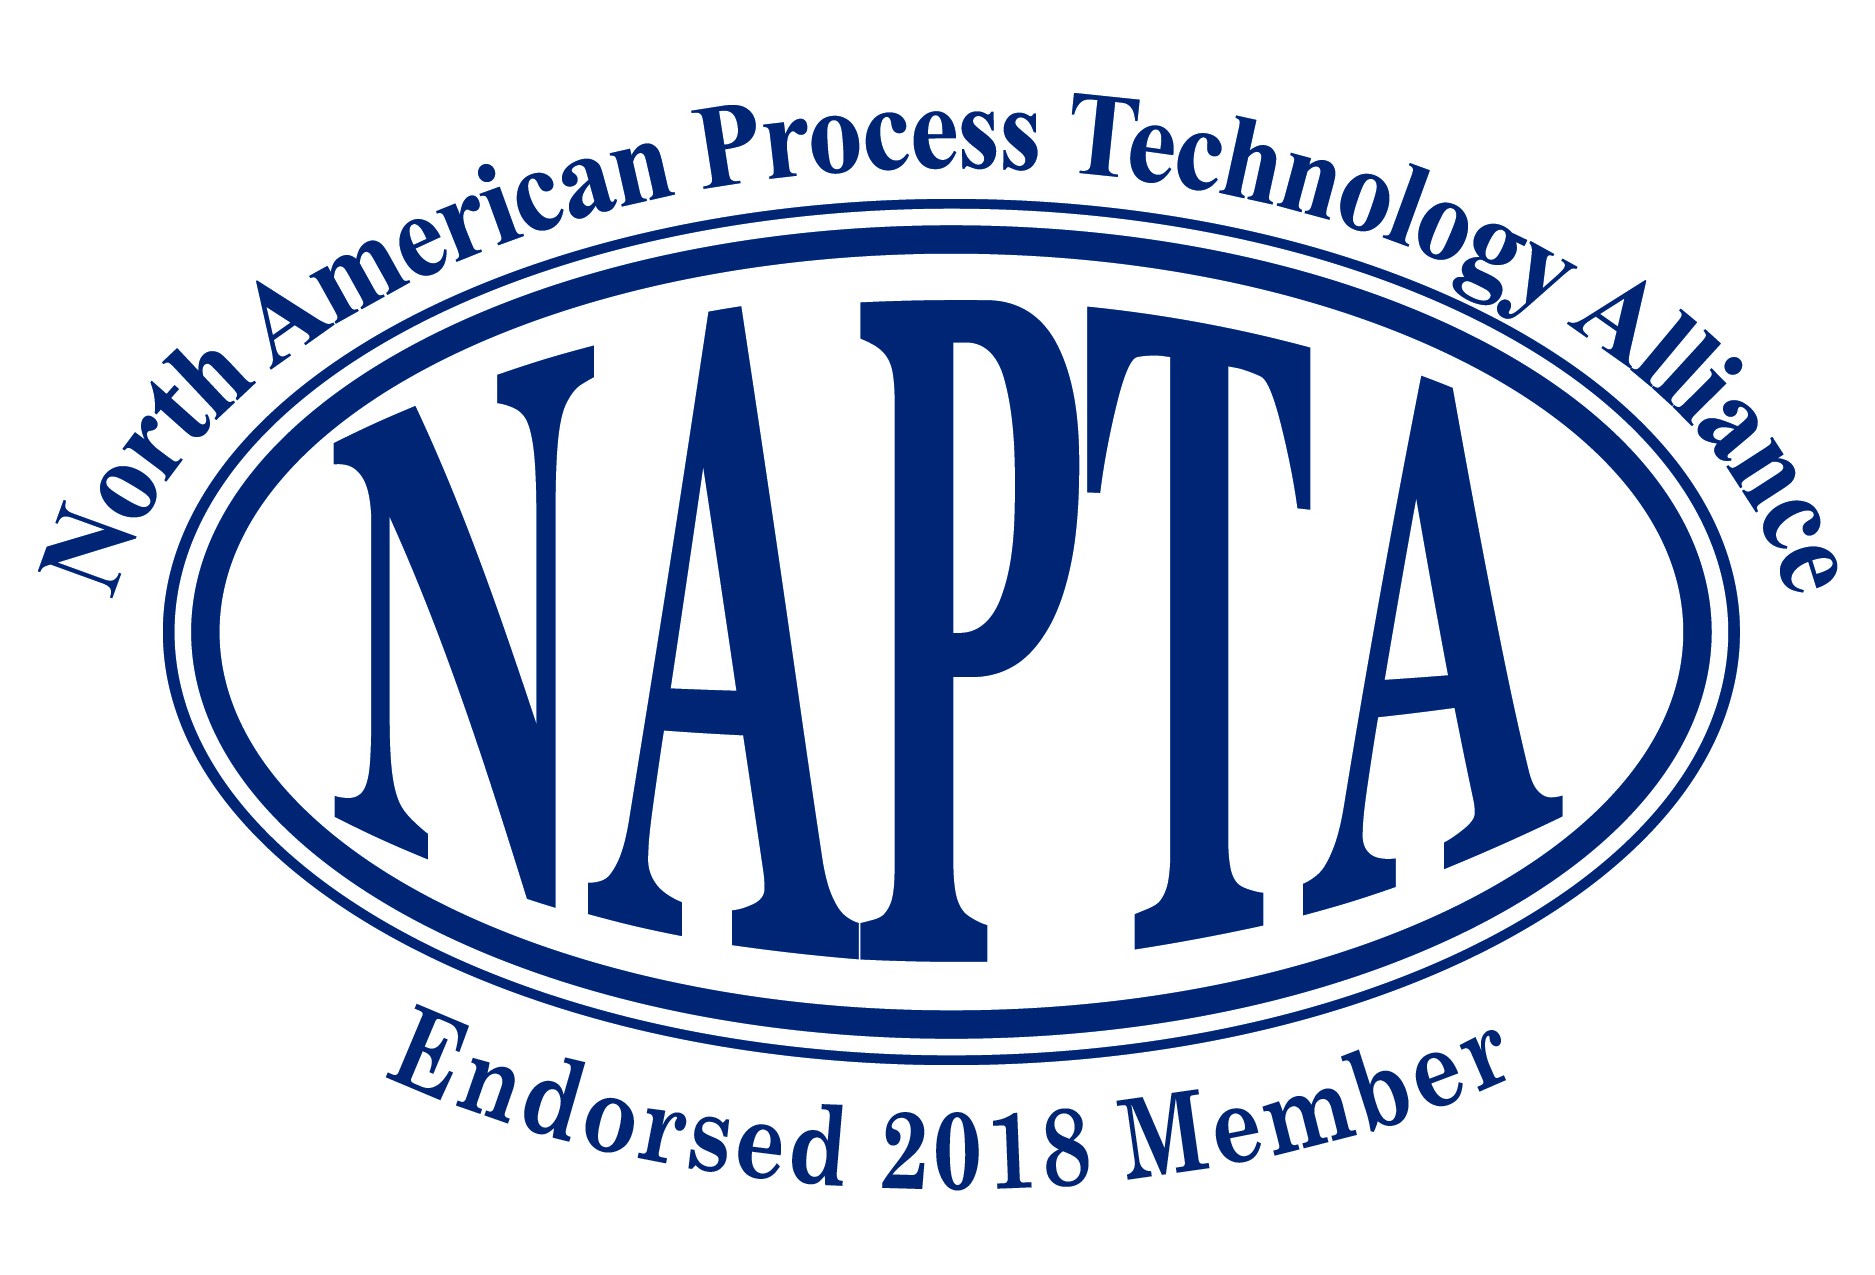 North American Process Technology Alliance